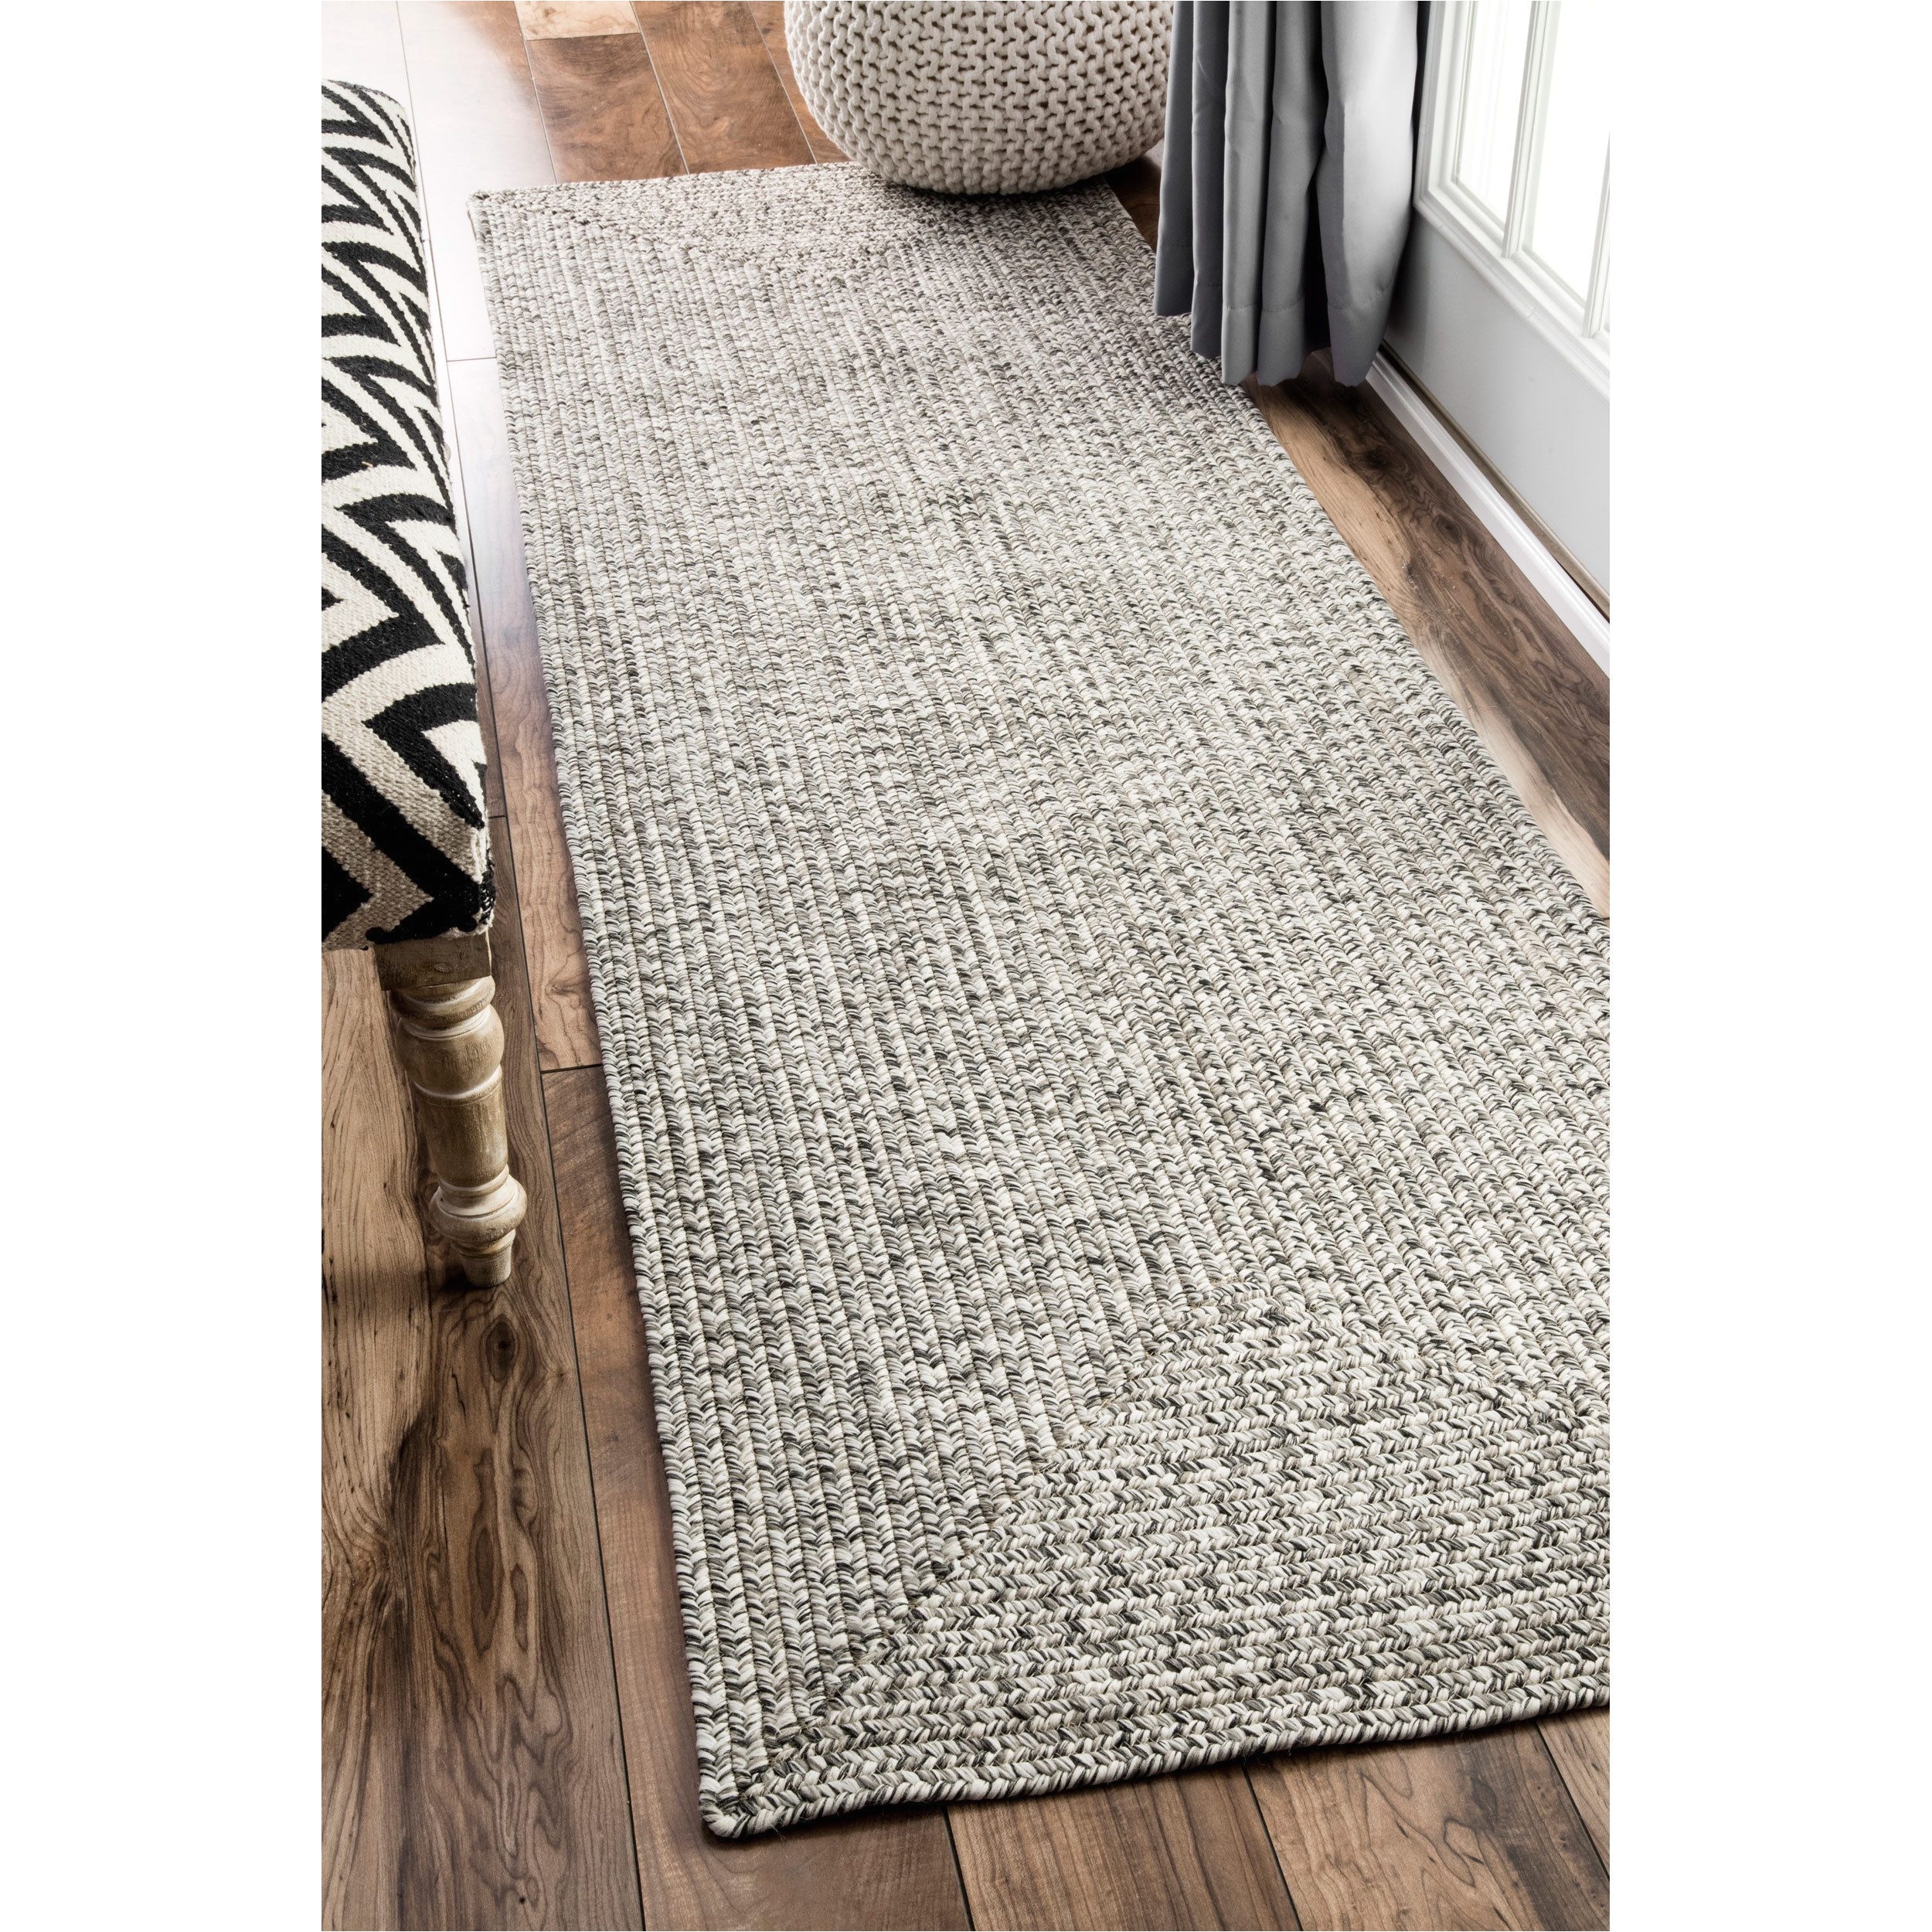 nuloom handmade casual solid braided light grey runnner rug 2 6 x 8 light grey size 2 x 8